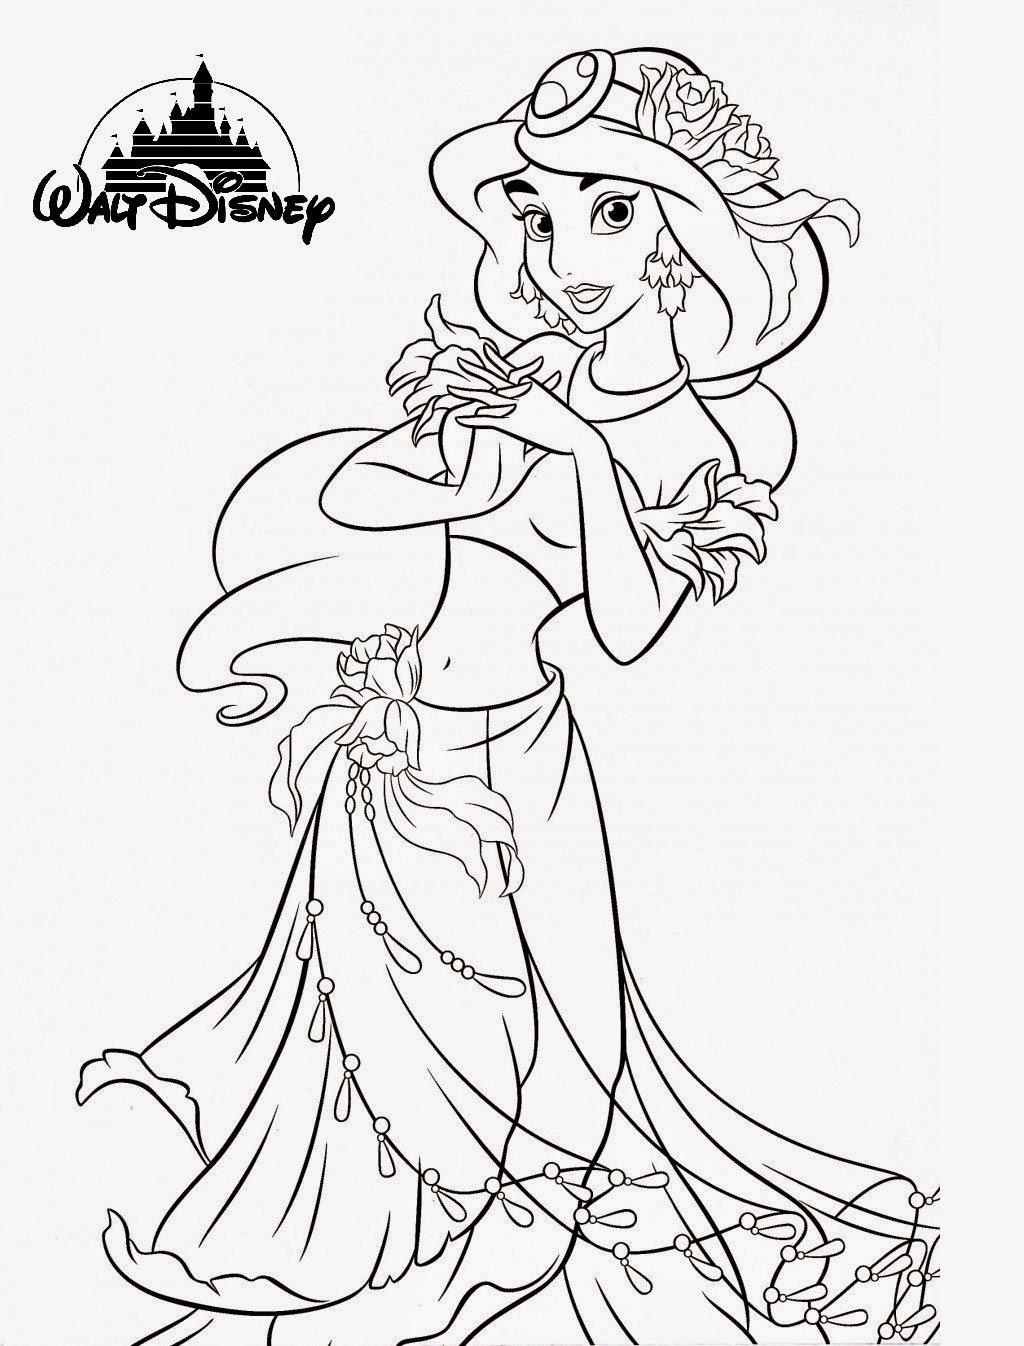 Disney Princess Jasmine Coloring Pages to Print